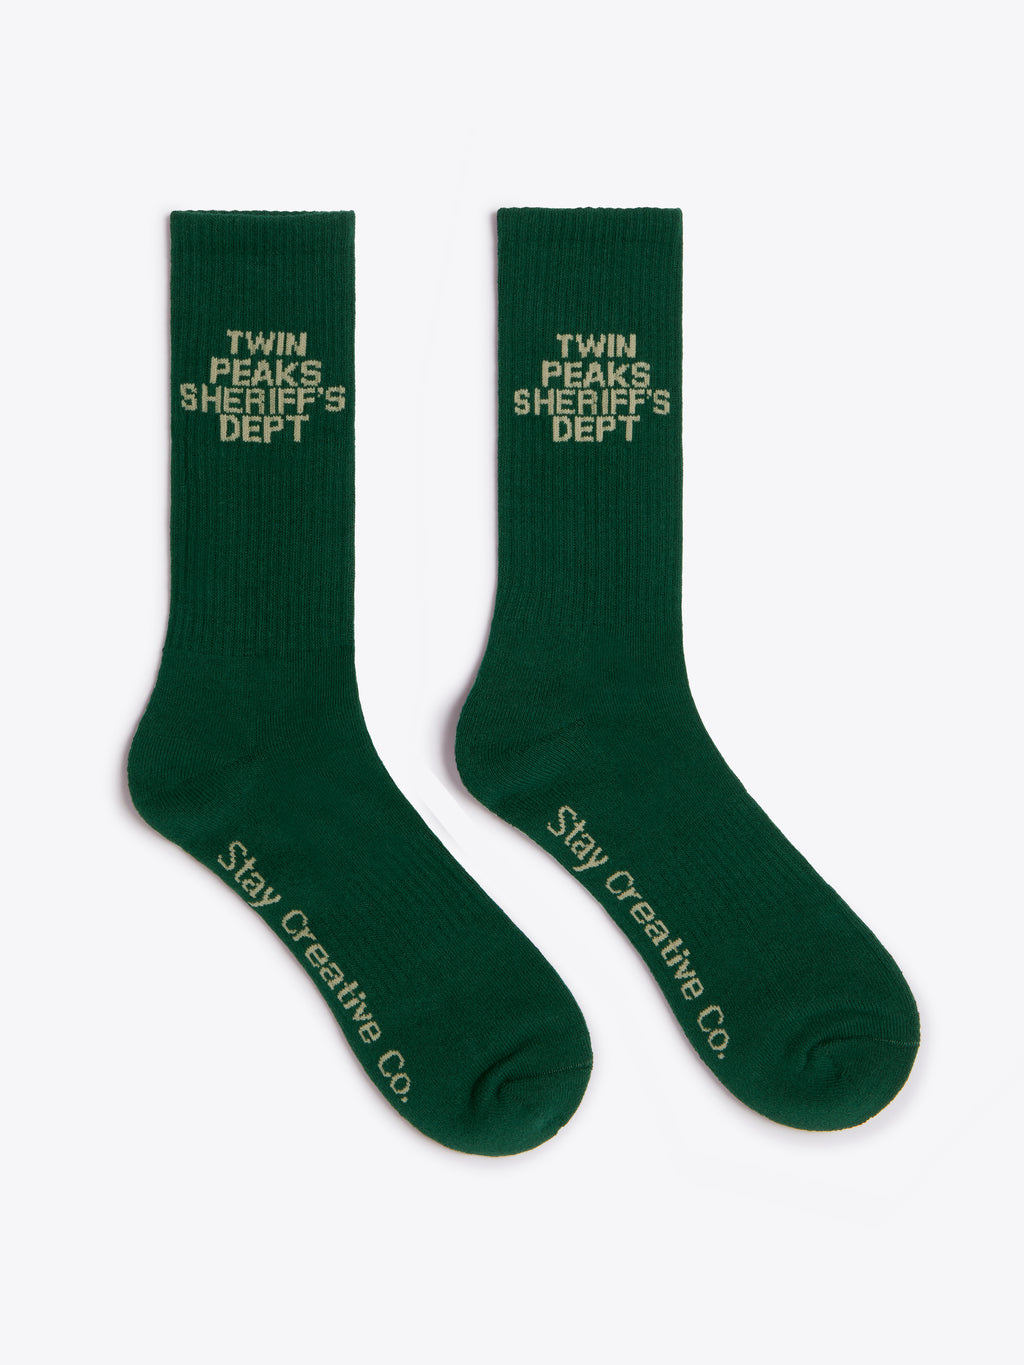 Sheriffs Department Socks - Pine